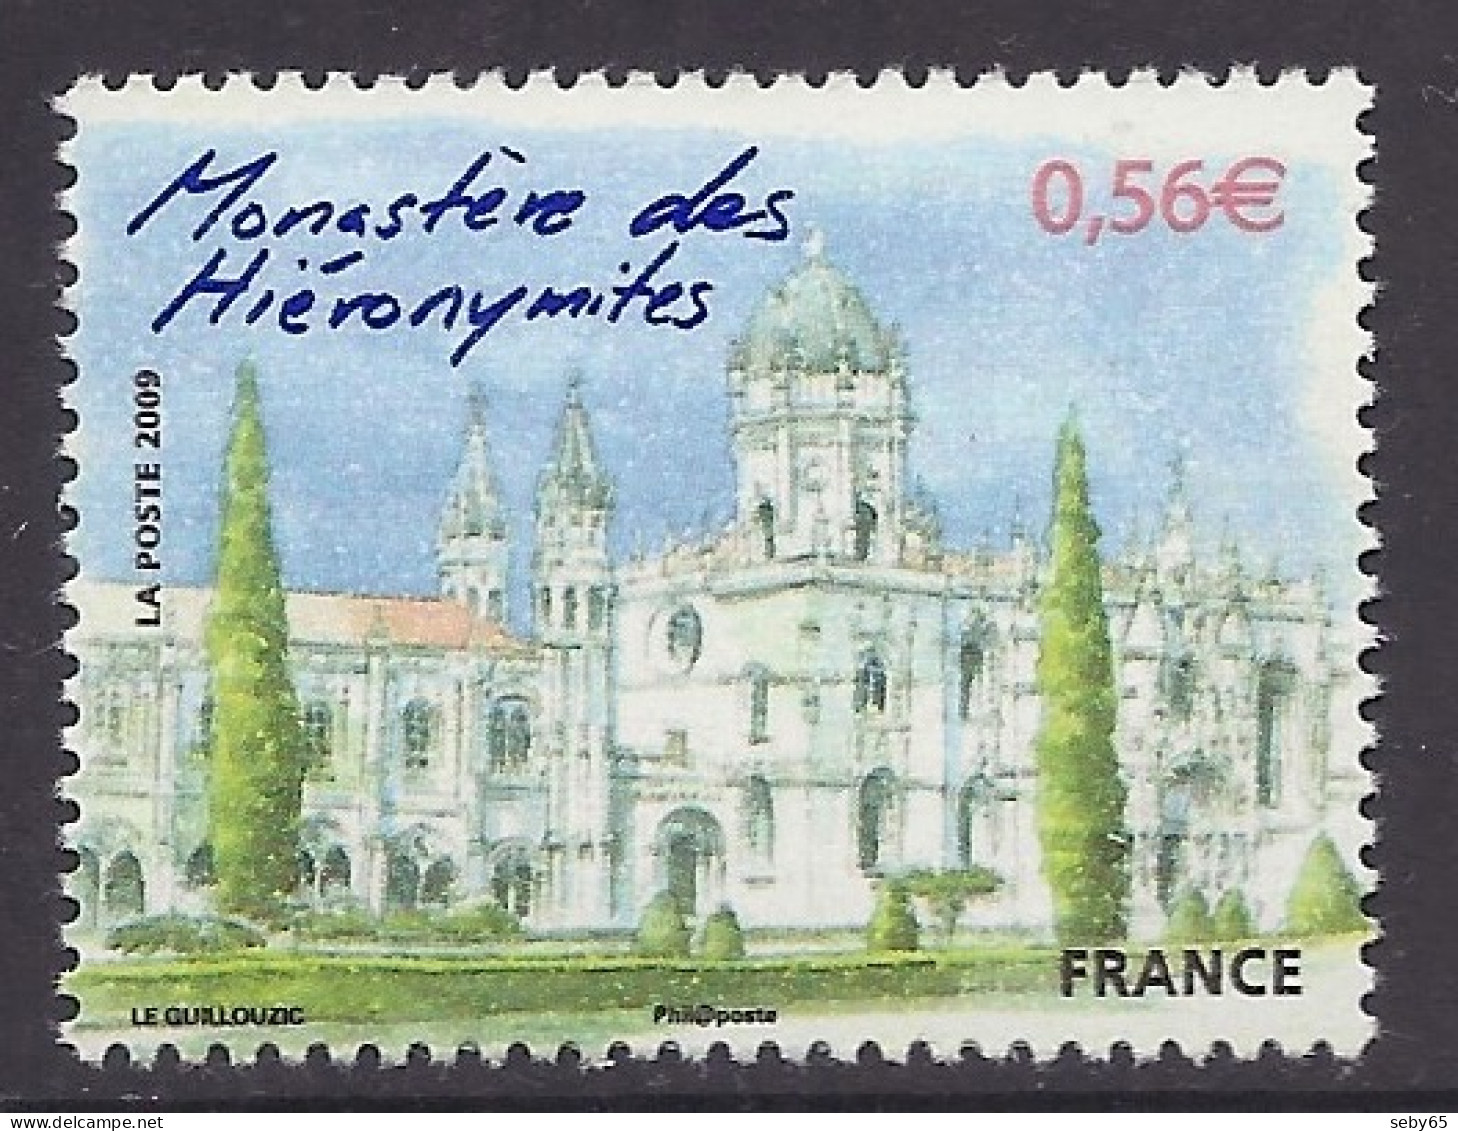 France 2009 - Capitales Européennes, Lisbonne, Lisboa, Lisbona, European Capitals, Monastery Of Hieronymites - MNH - Nuevos